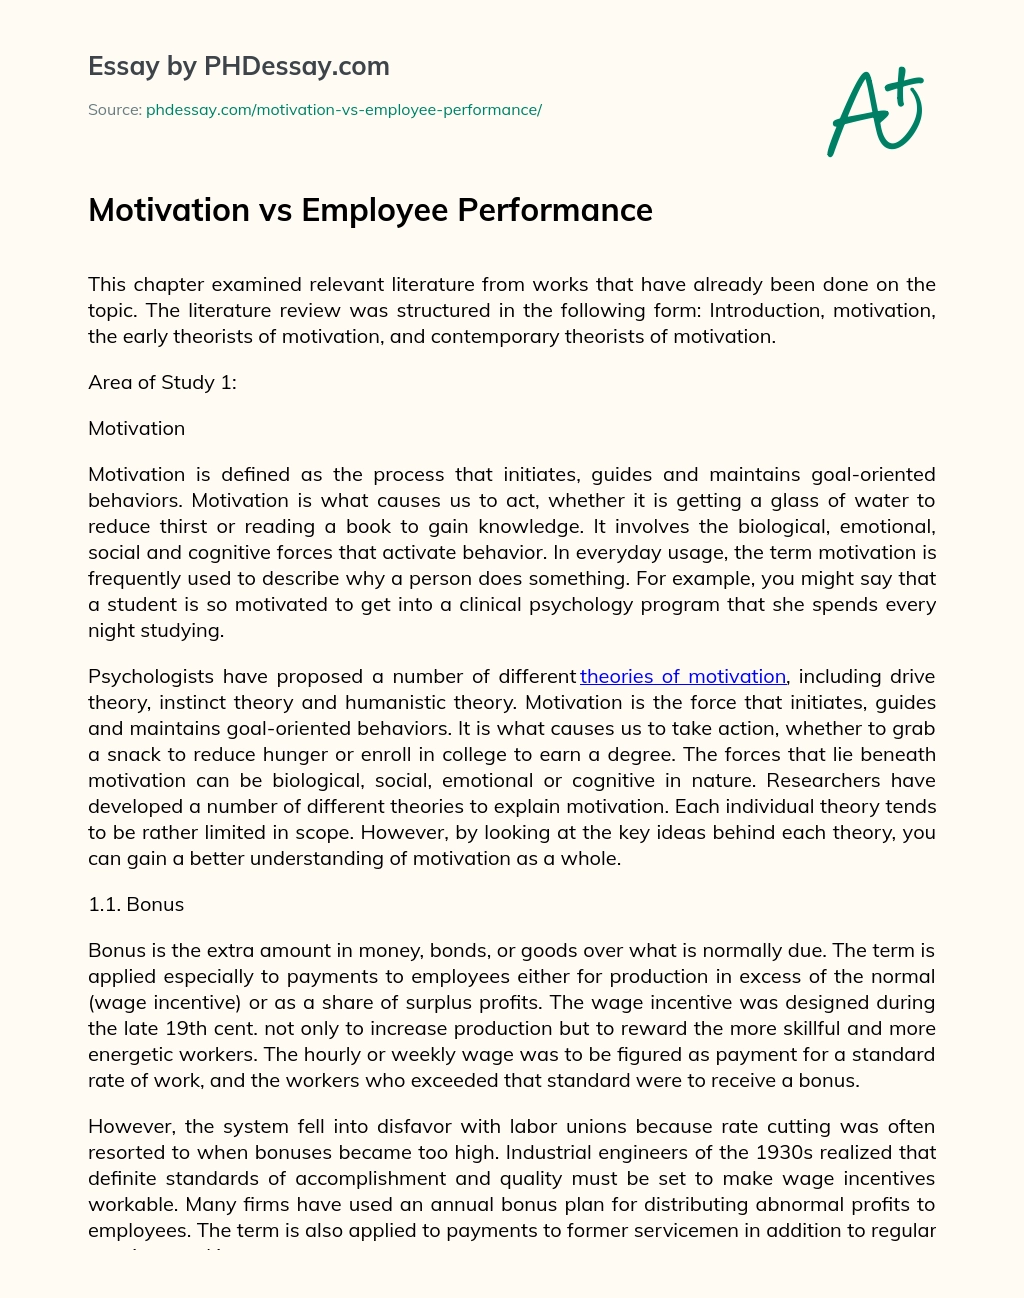 Motivation vs Employee Performance essay